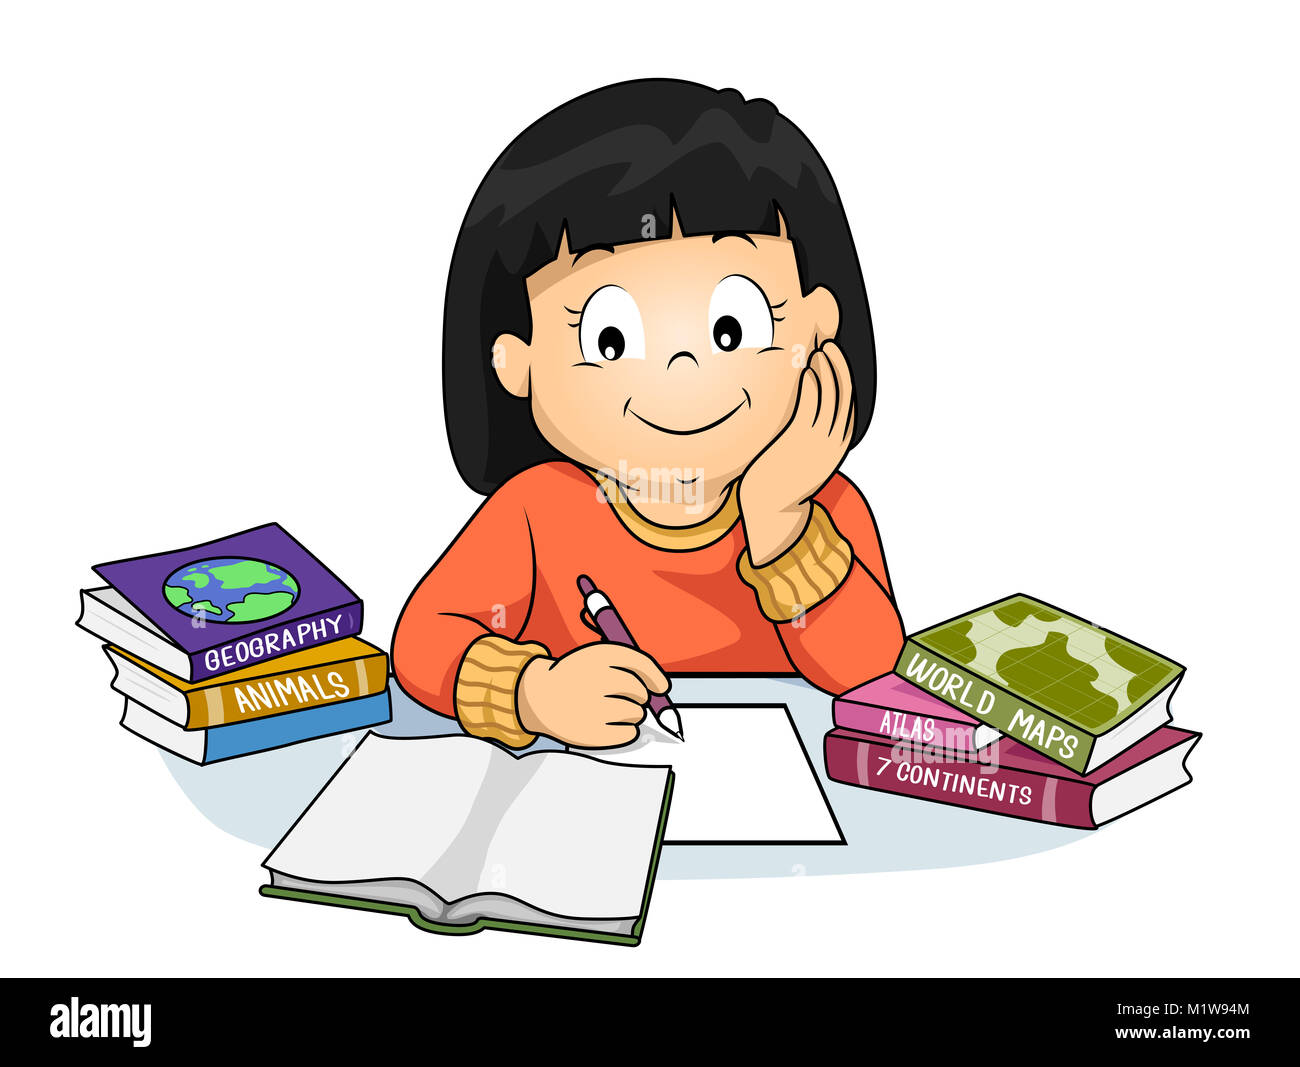 child doing homework cartoon